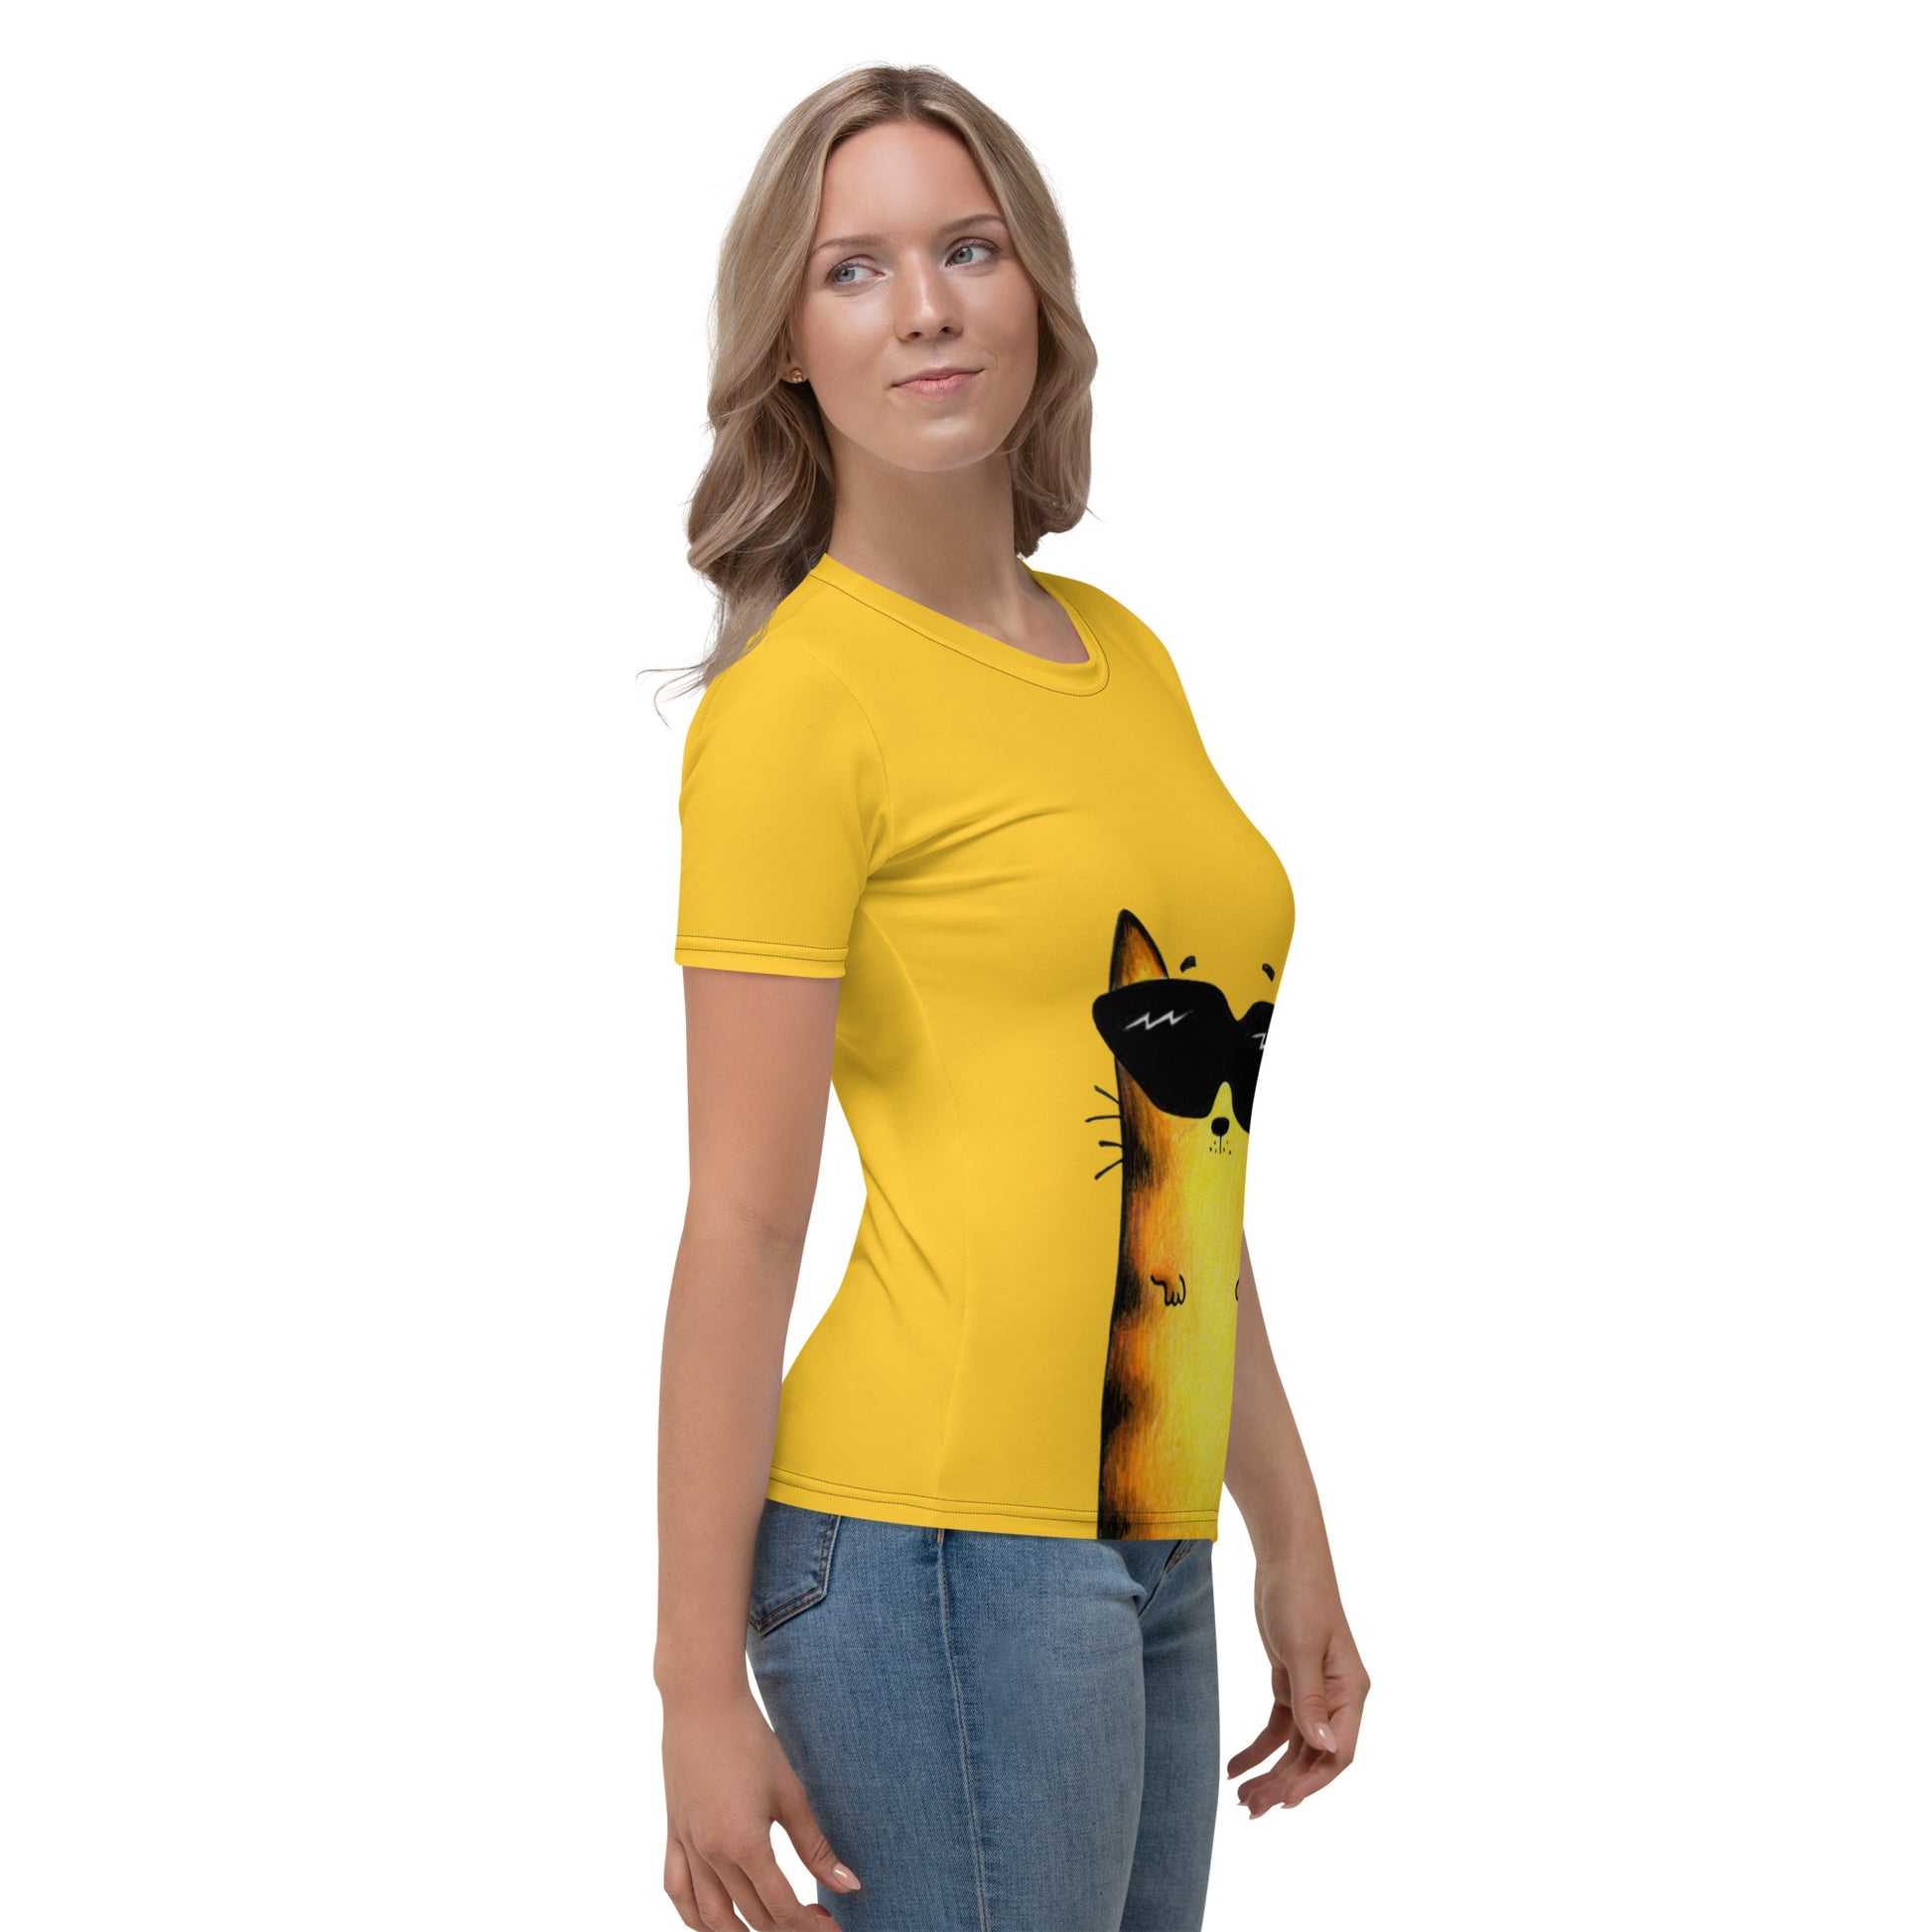 Yellow ladies t-shirt with yellow cat design